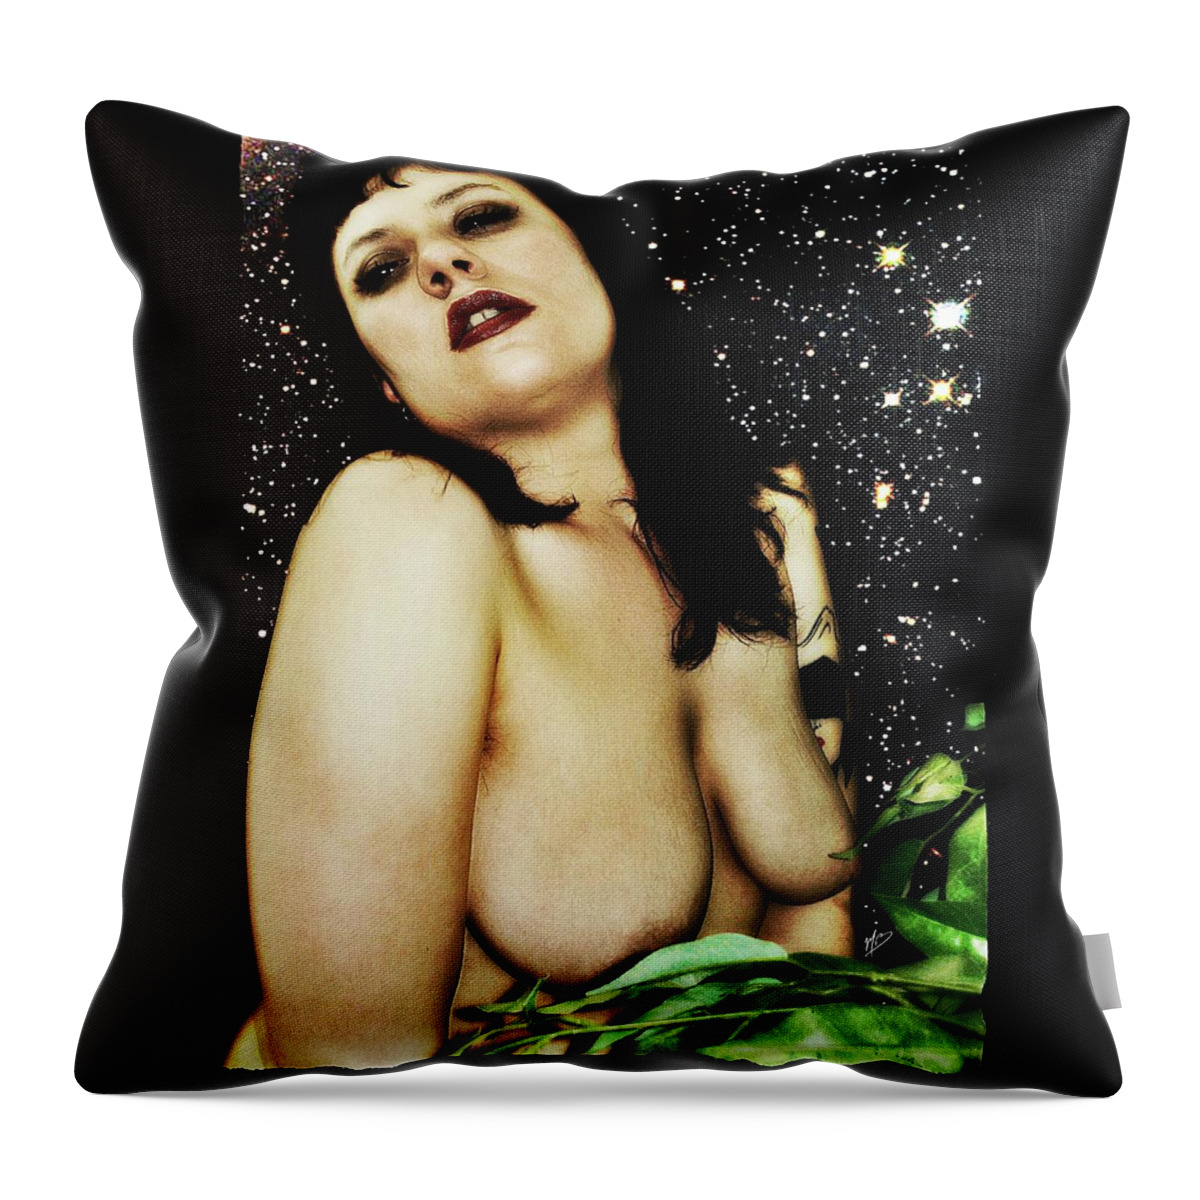 Alien Throw Pillow featuring the digital art Nadine 2 by Mark Baranowski